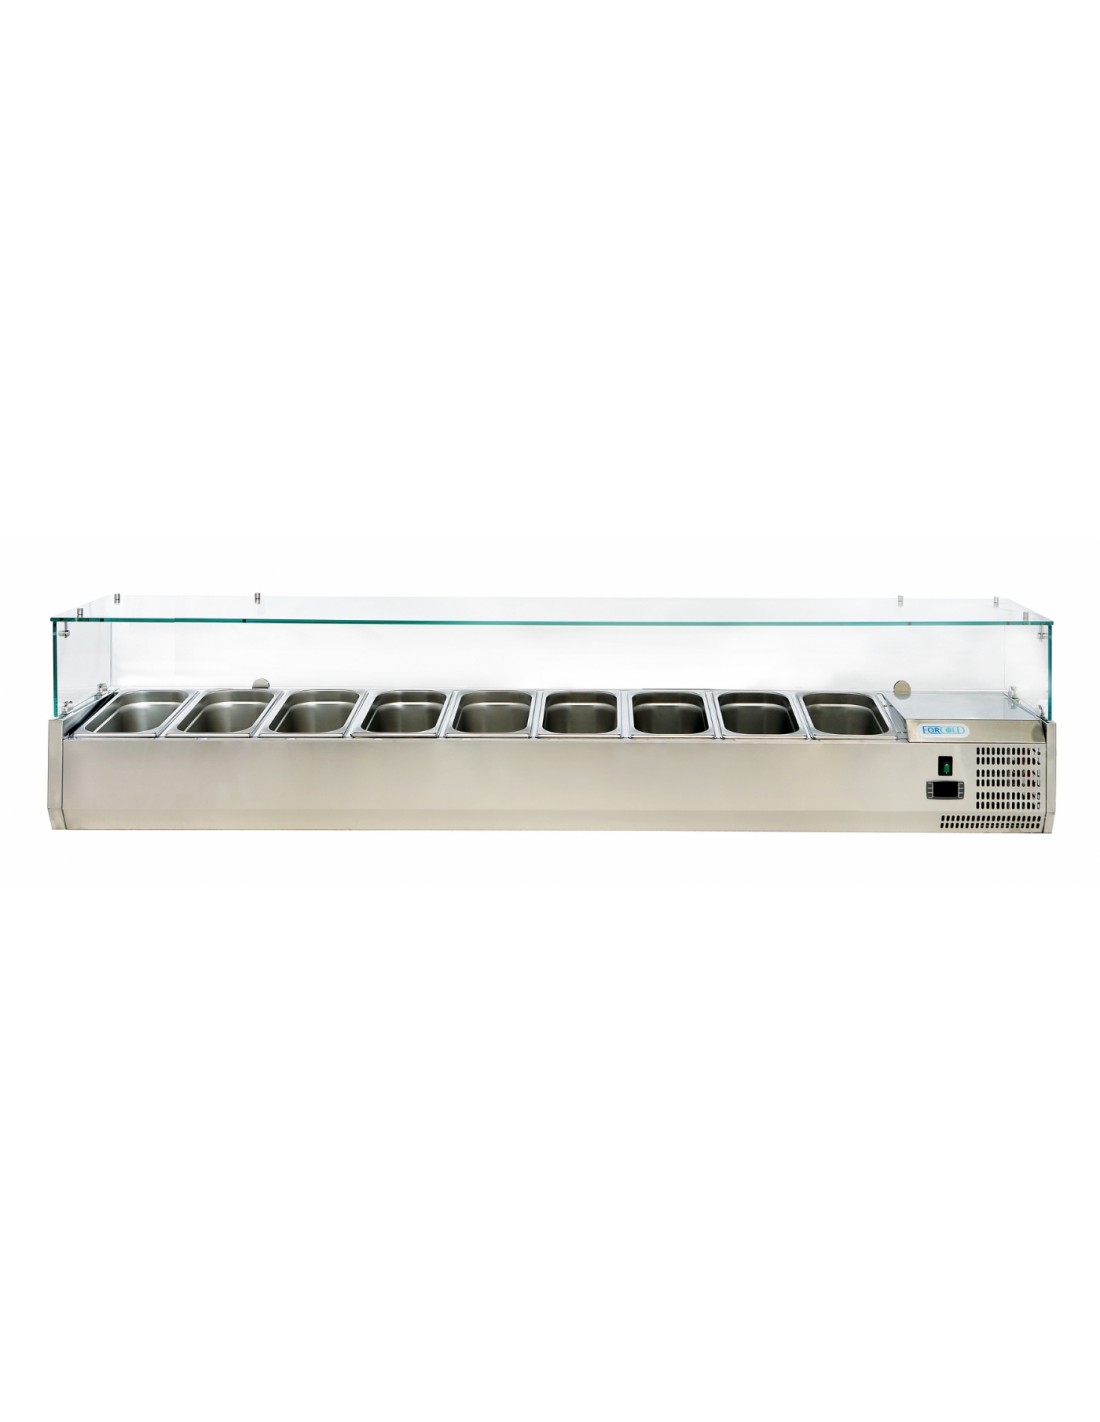 Showcase door ingredients - capacity basins n. 9 gn 1/3 - glass lift - size cm 200 x 39.3 x 43.5 h